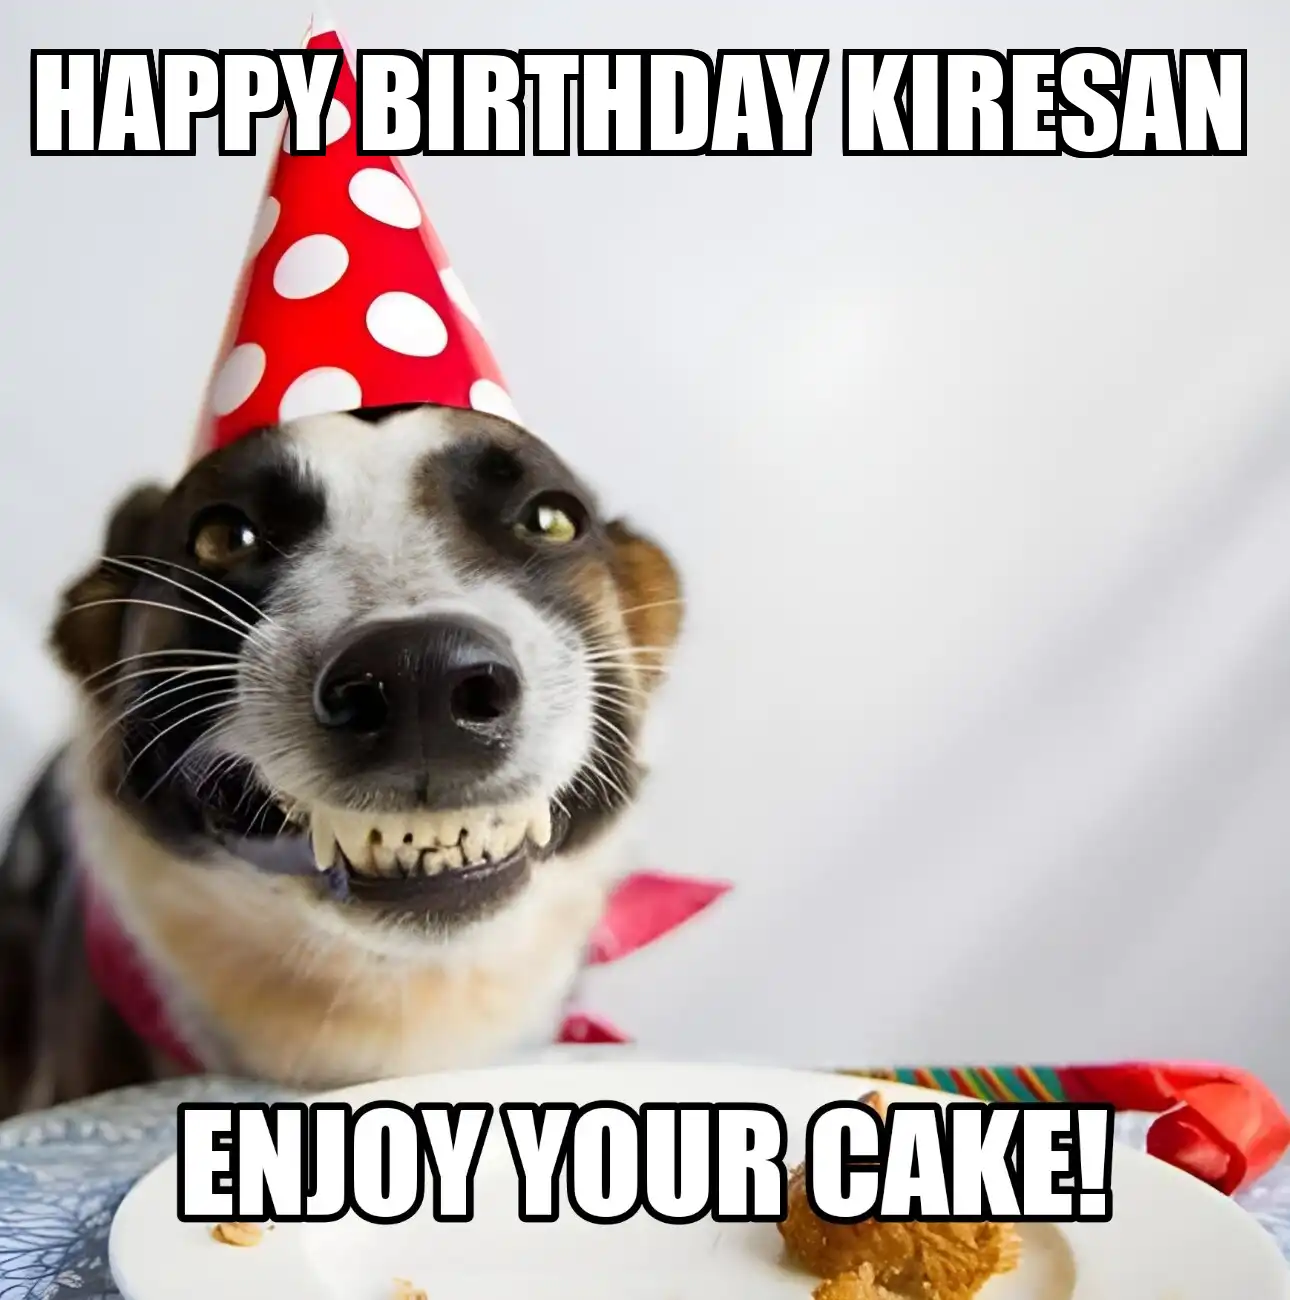 Happy Birthday Kiresan Enjoy Your Cake Dog Meme